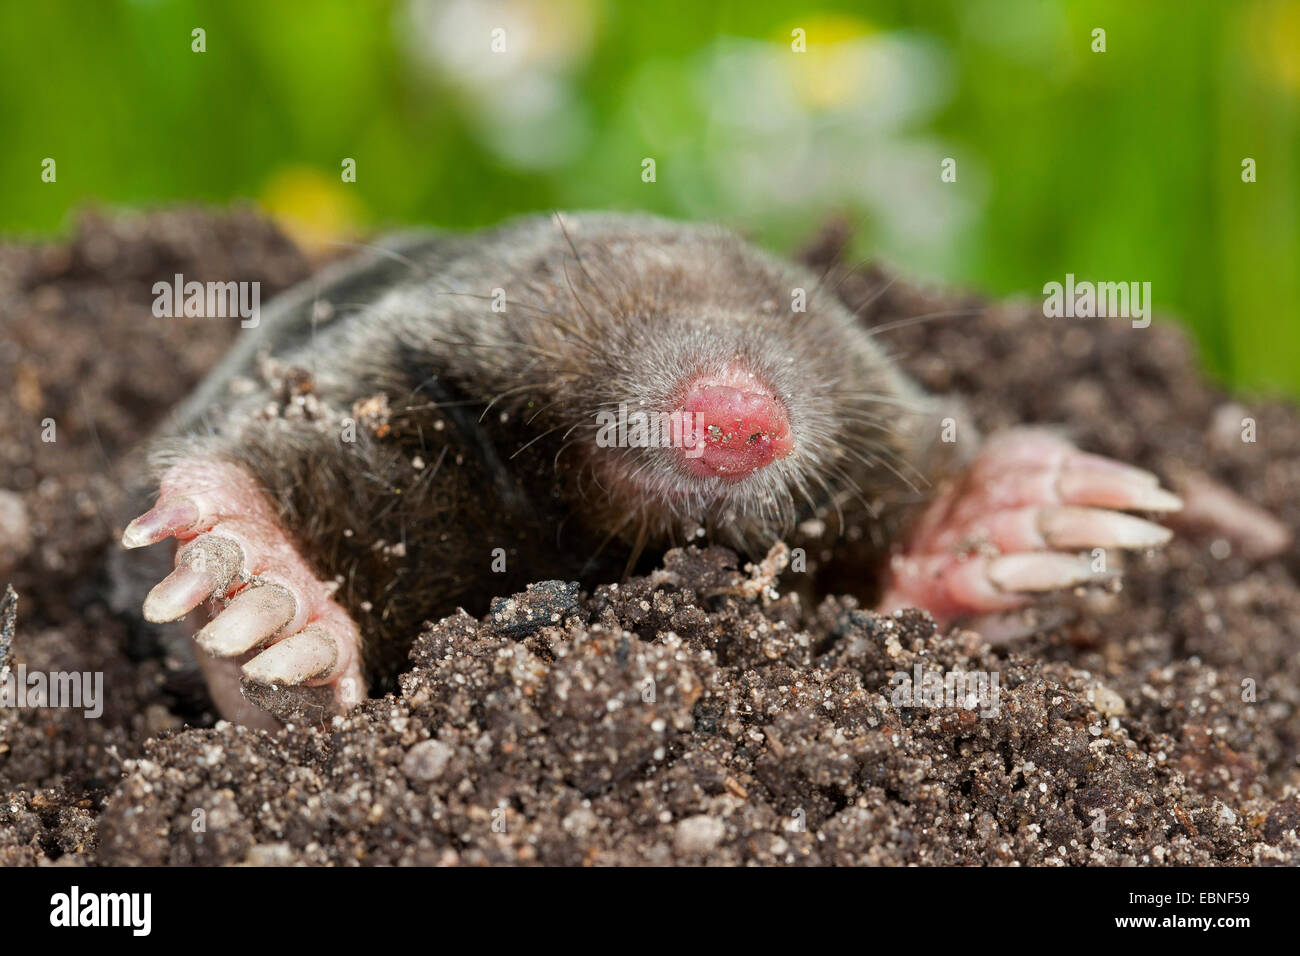 European mole, Common mole, Northern mole (Talpa europaea), on molehill in the garden, Germany Stock Photo